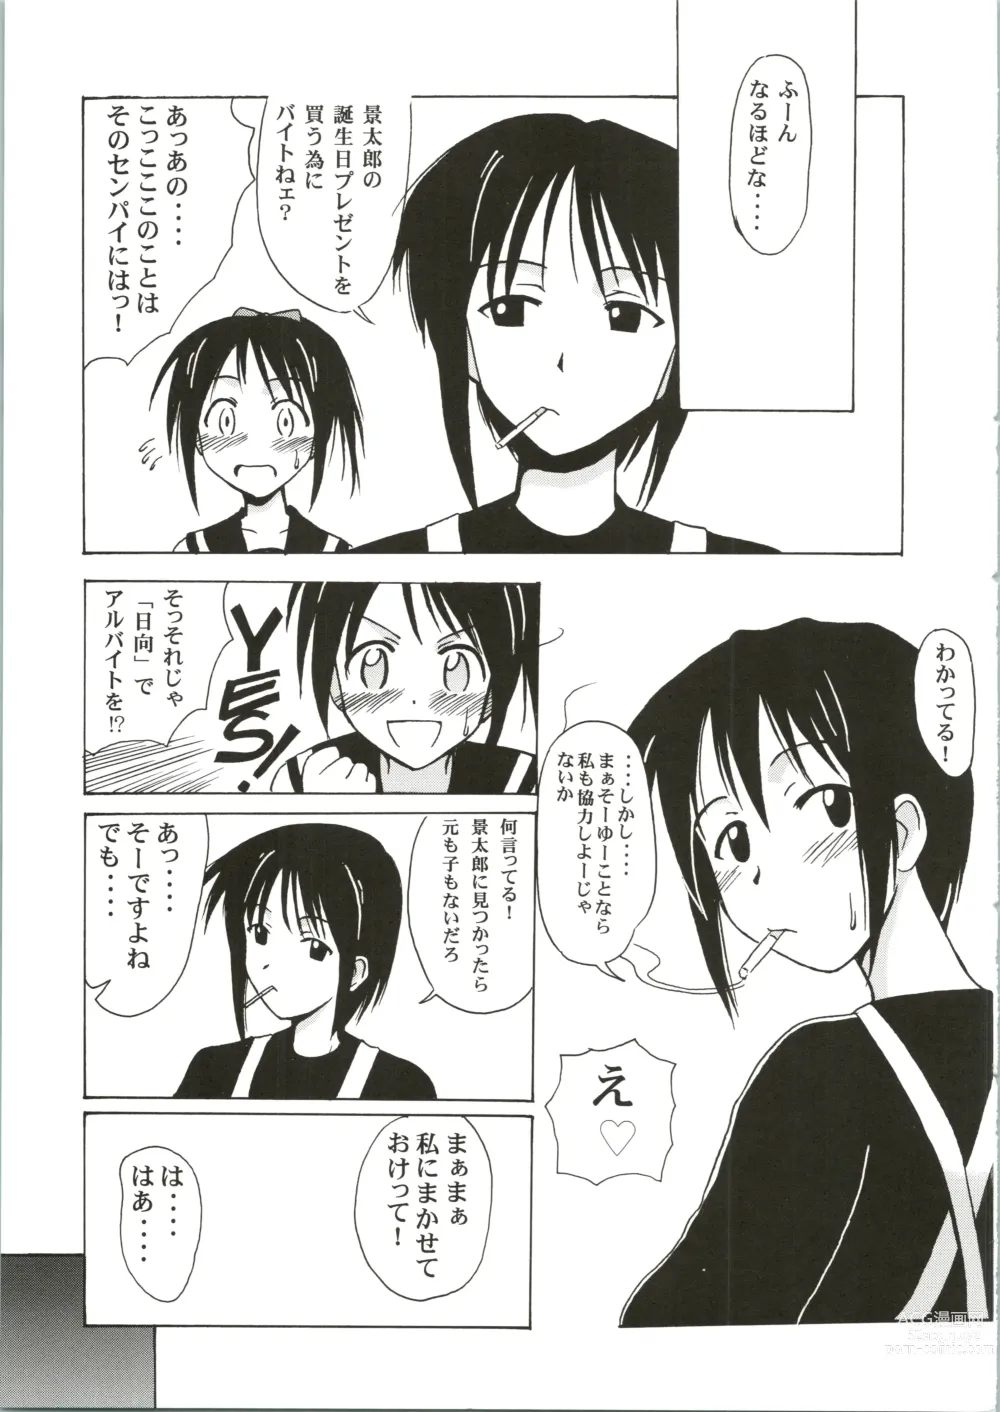 Page 7 of doujinshi Shinobu SP.